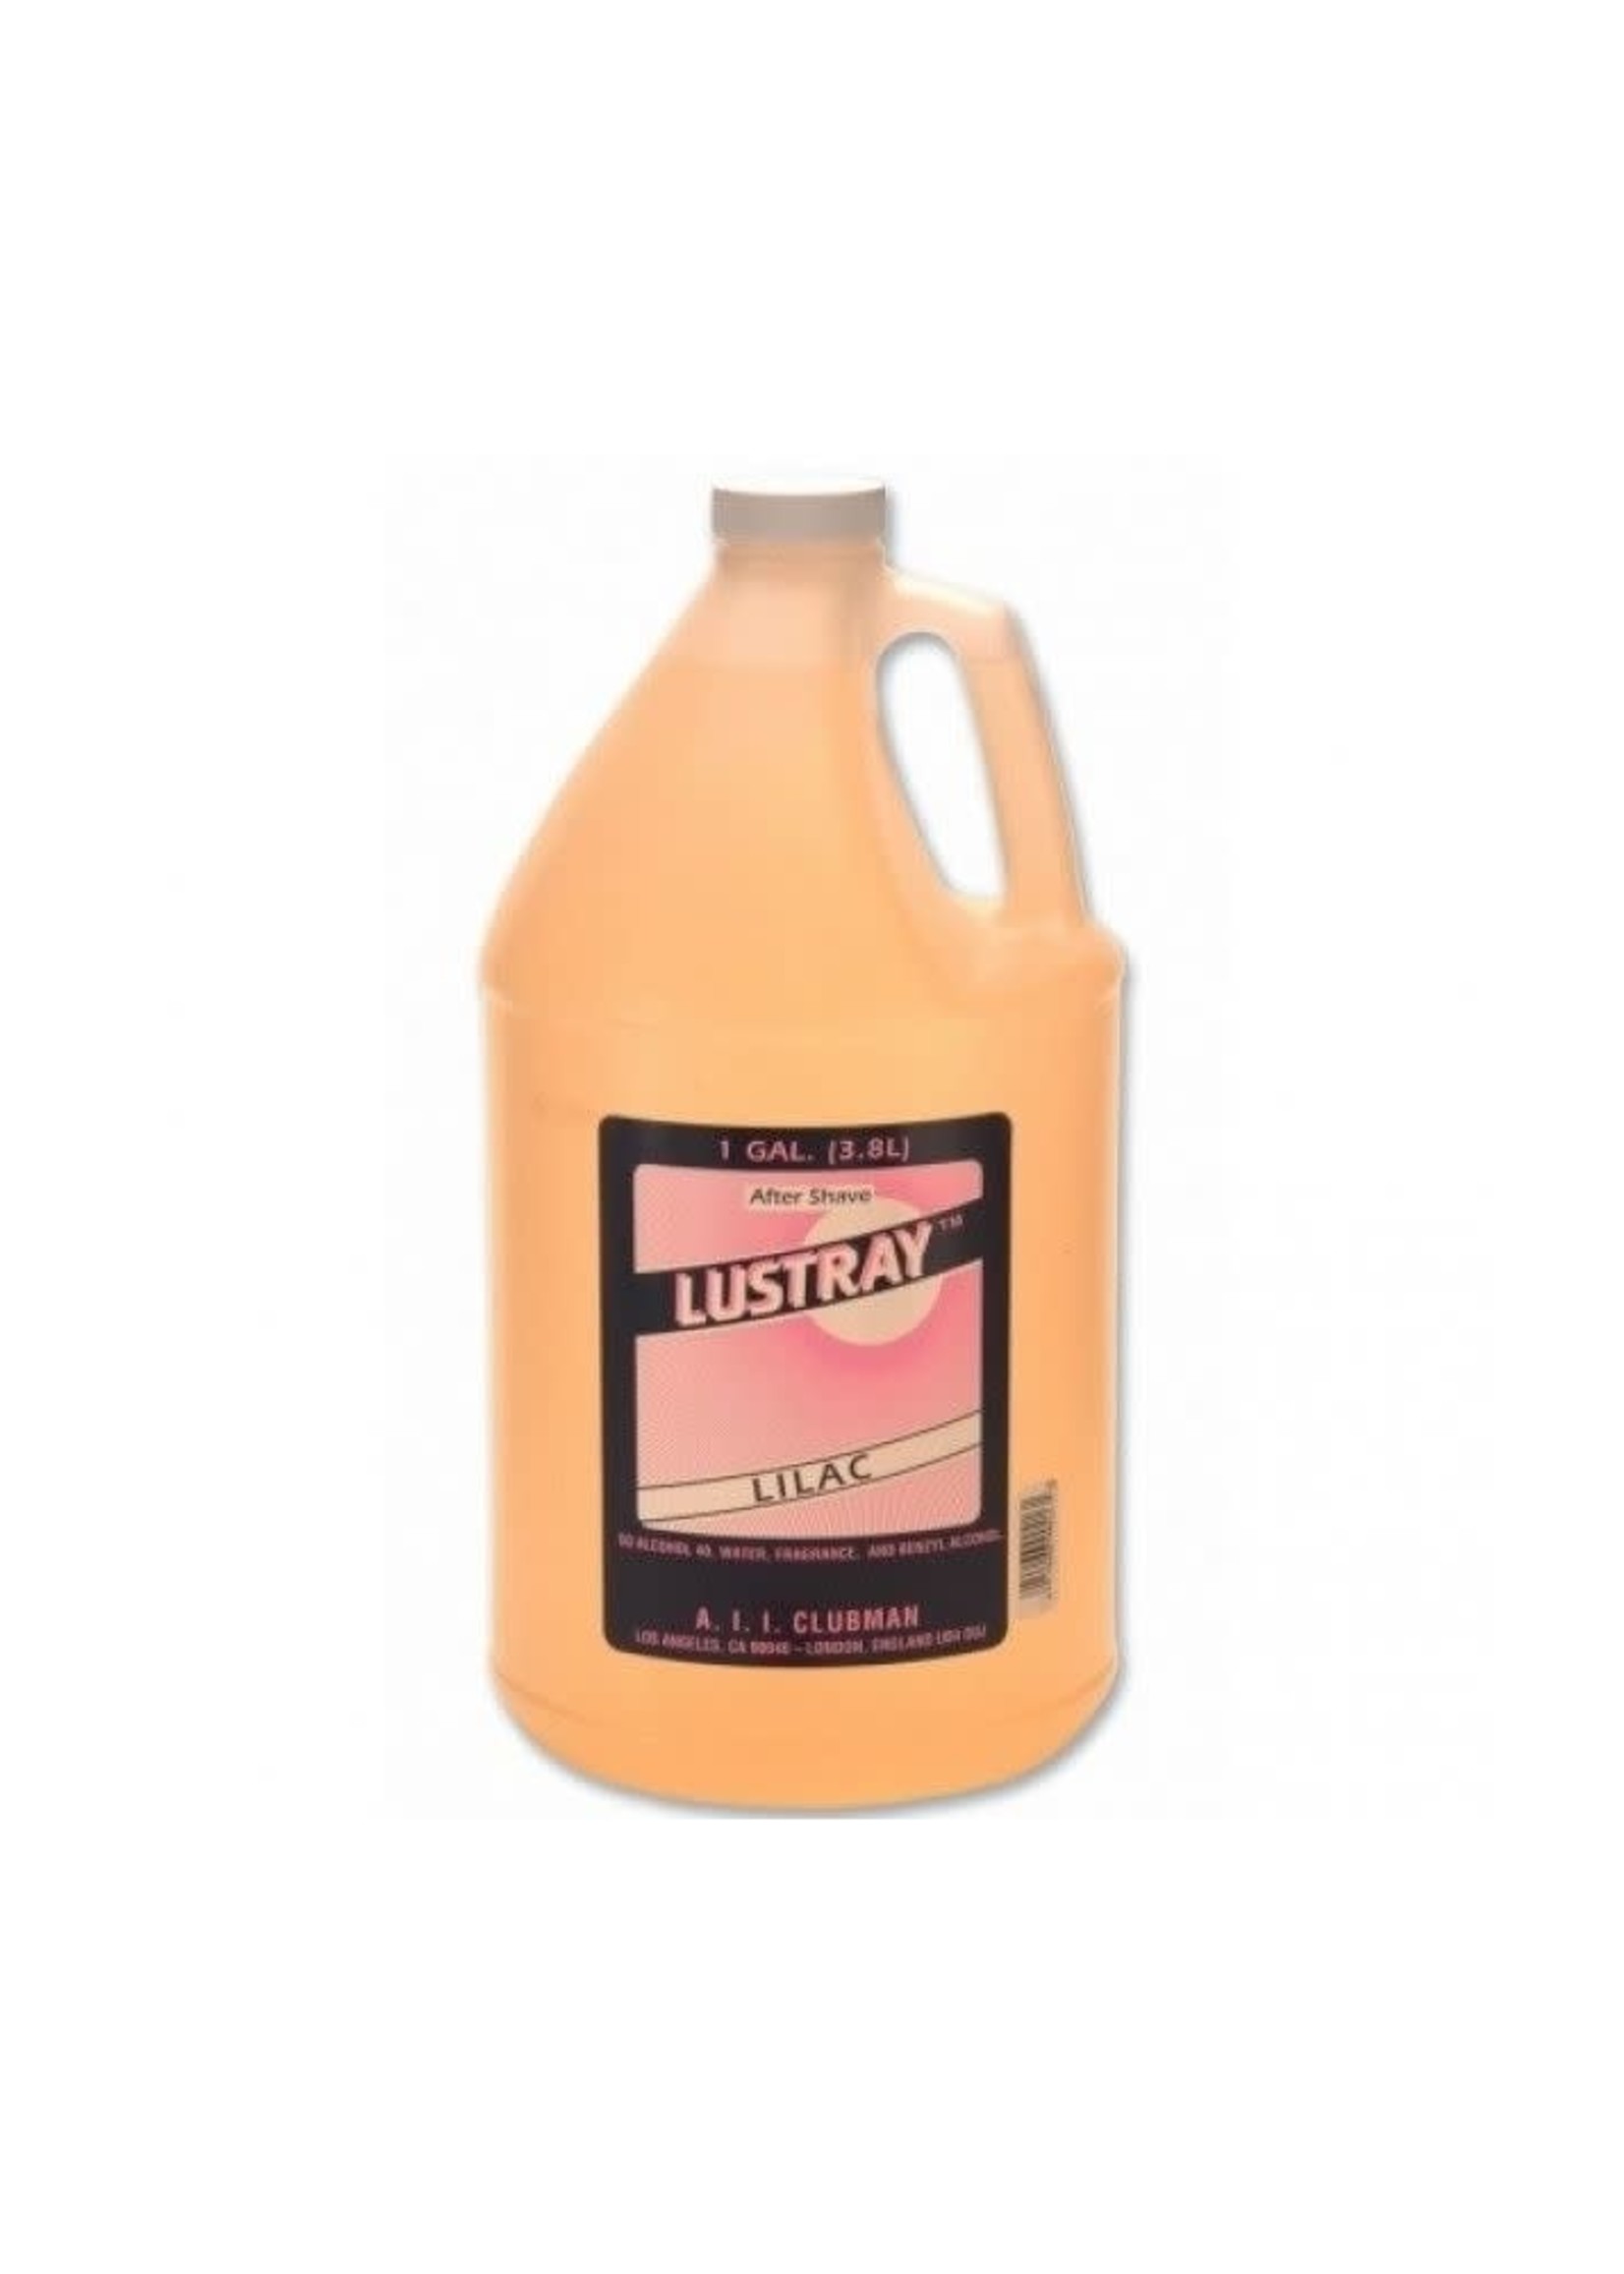 Clubman Lustray Lilac- 1 gallon